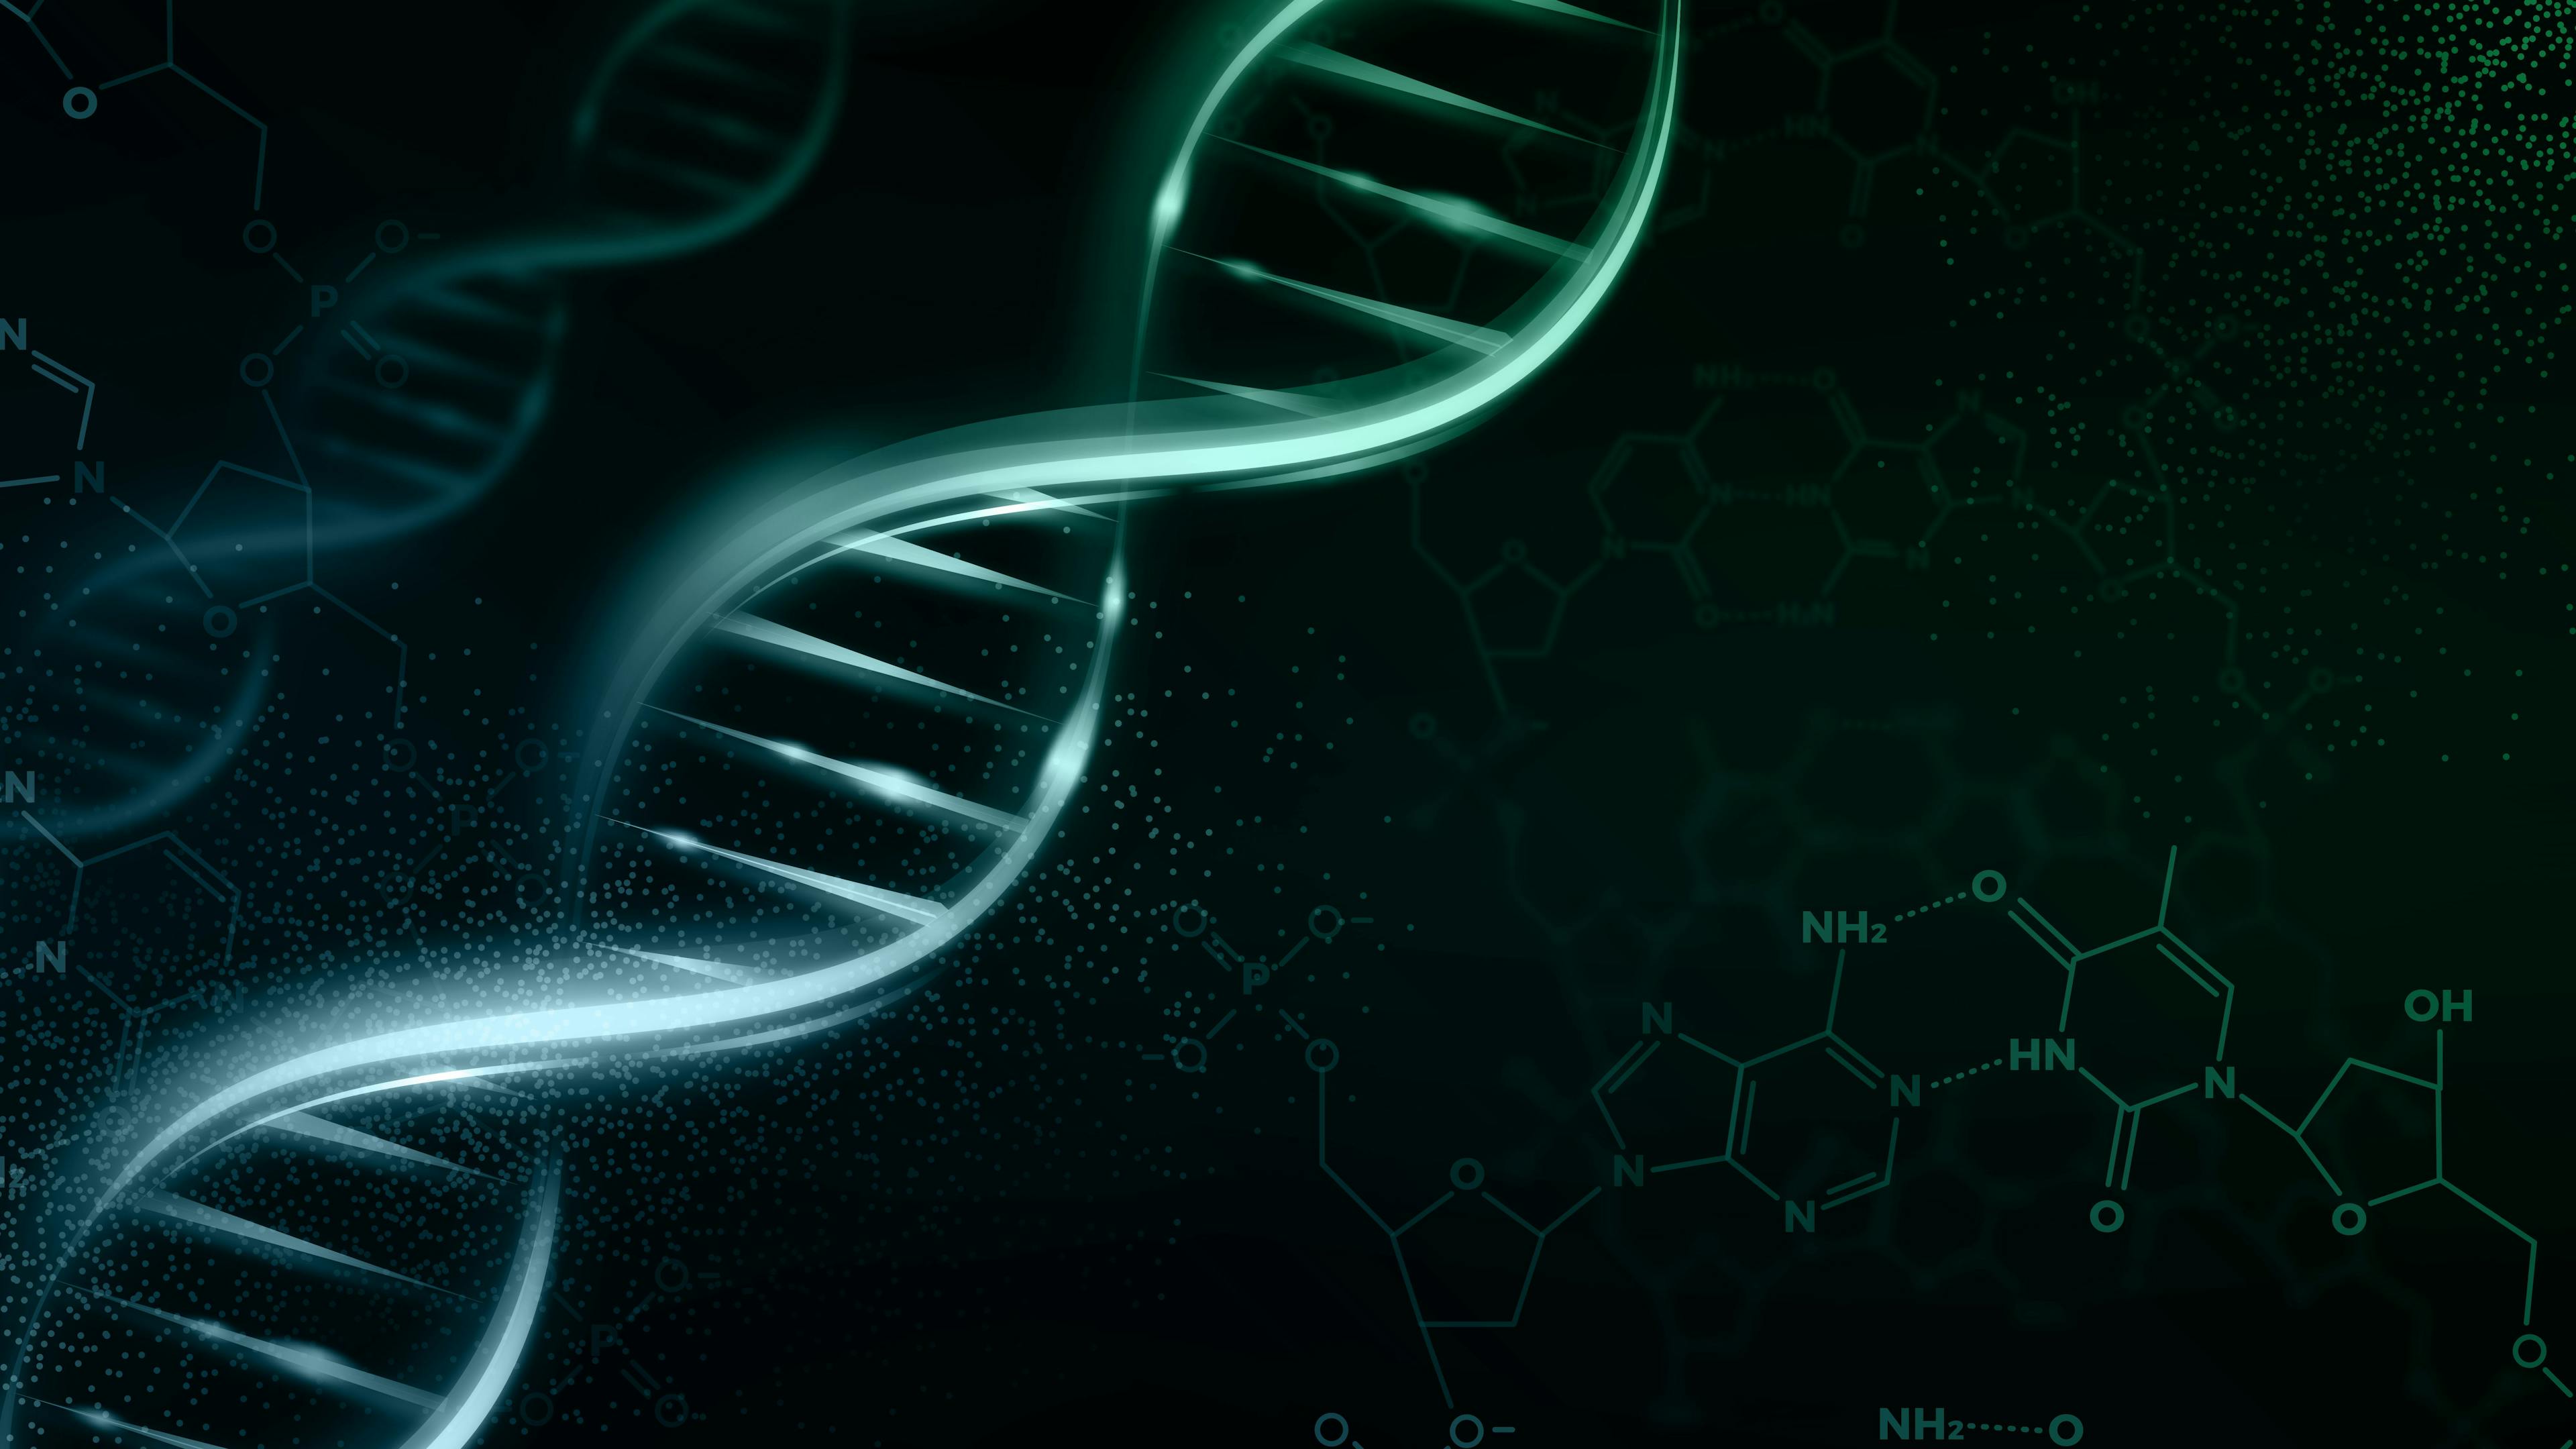 DNA strand abstract illustration | Image Credit: © Adam - stock.adobe.com